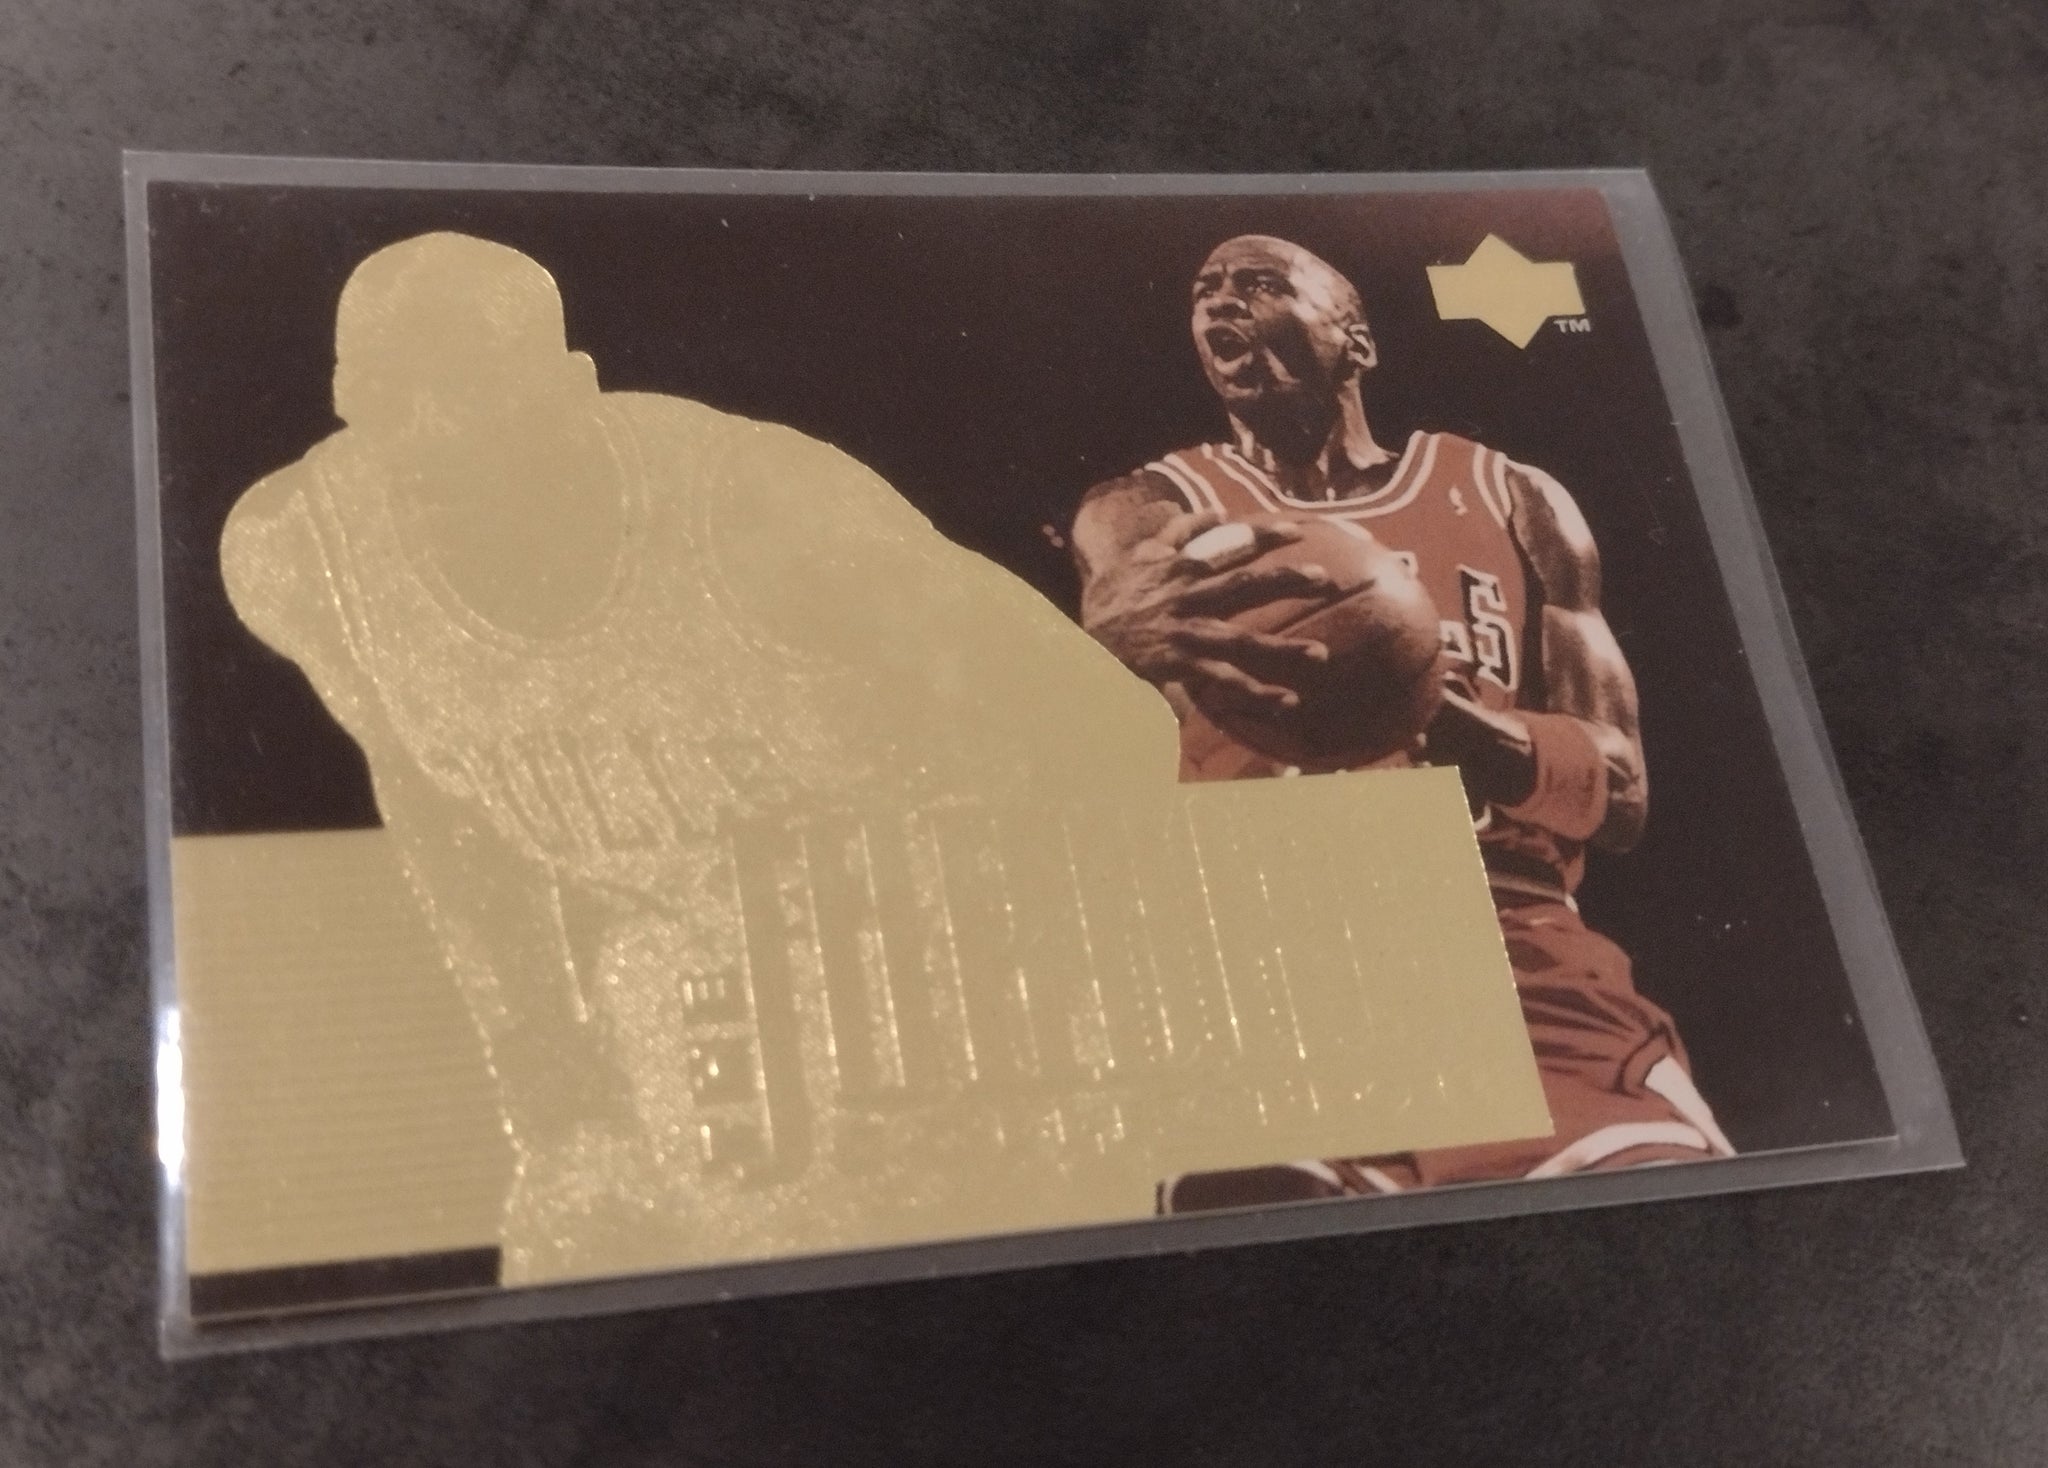 1995-96 Upper Deck Michael Jordan Collection #JC8 Trading Card